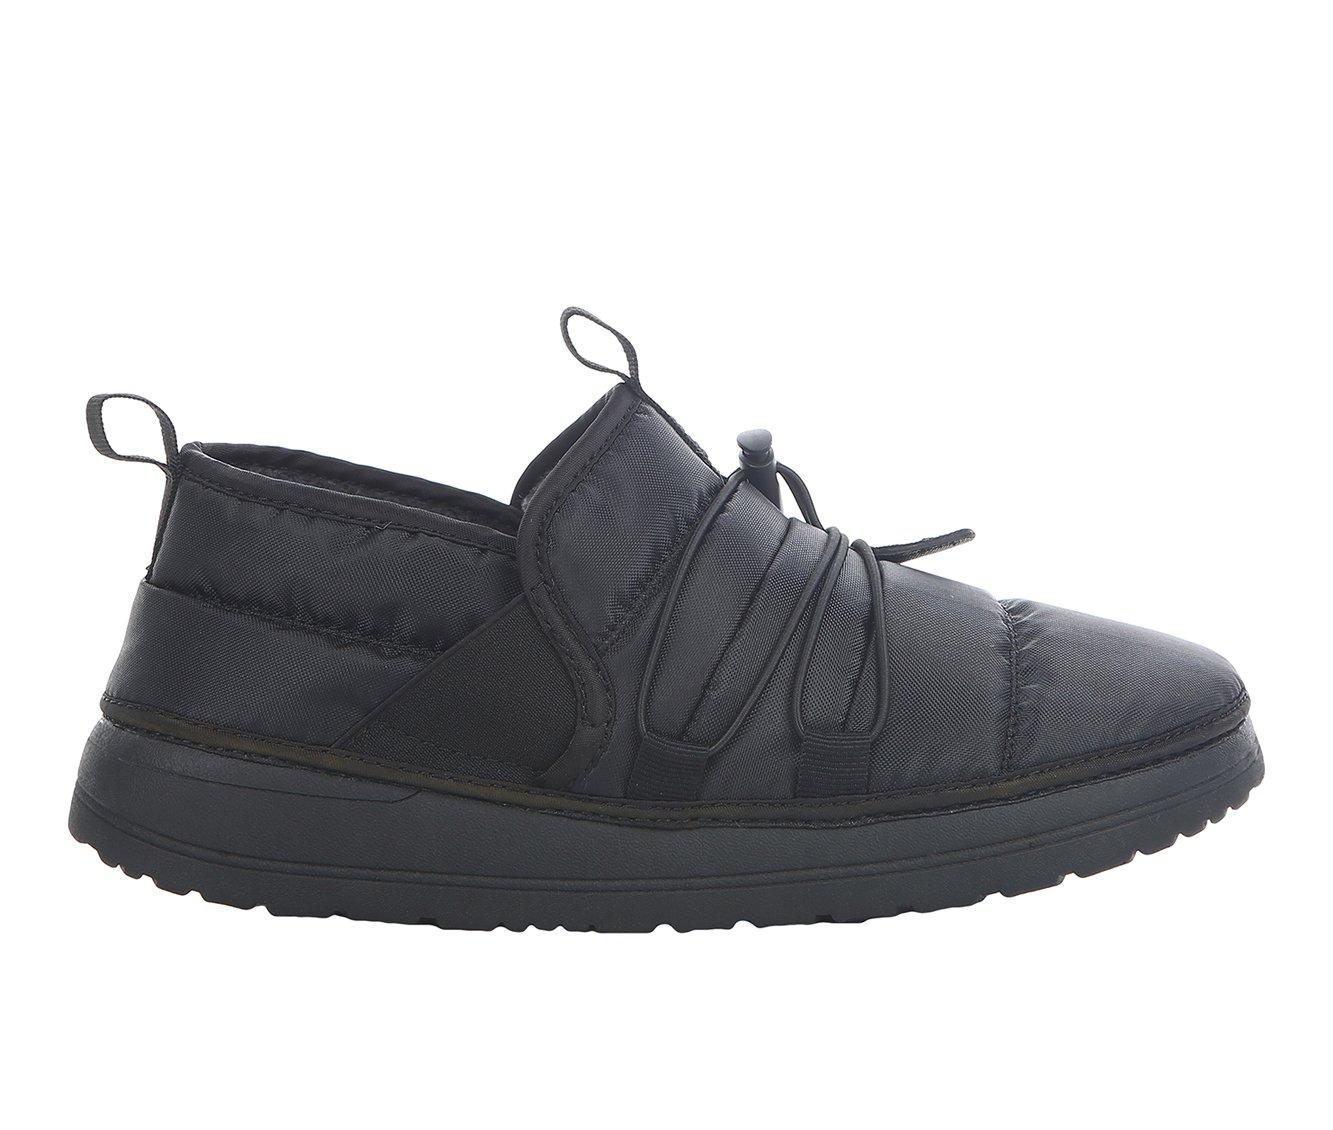 Men's Northside Rainer Mid Slip-On Shoes